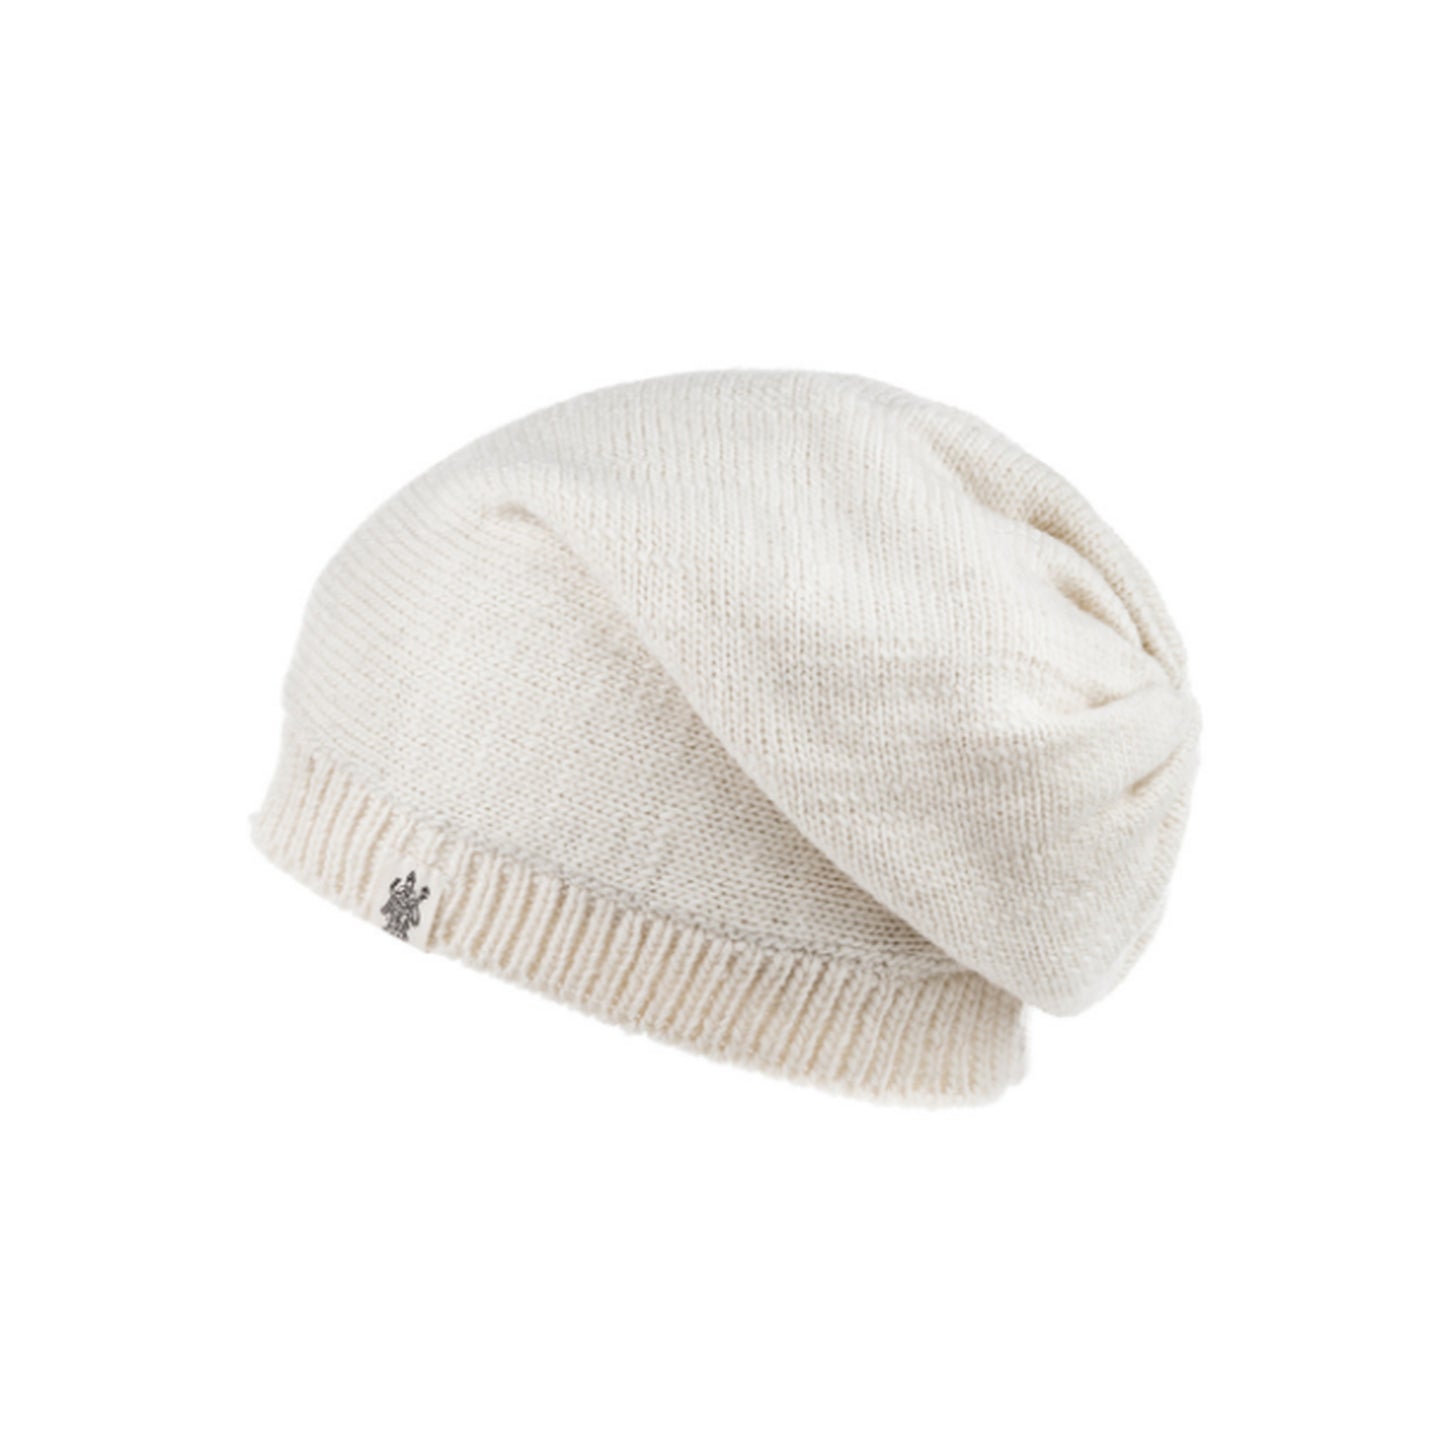 Dekalb Slouch Hat, White